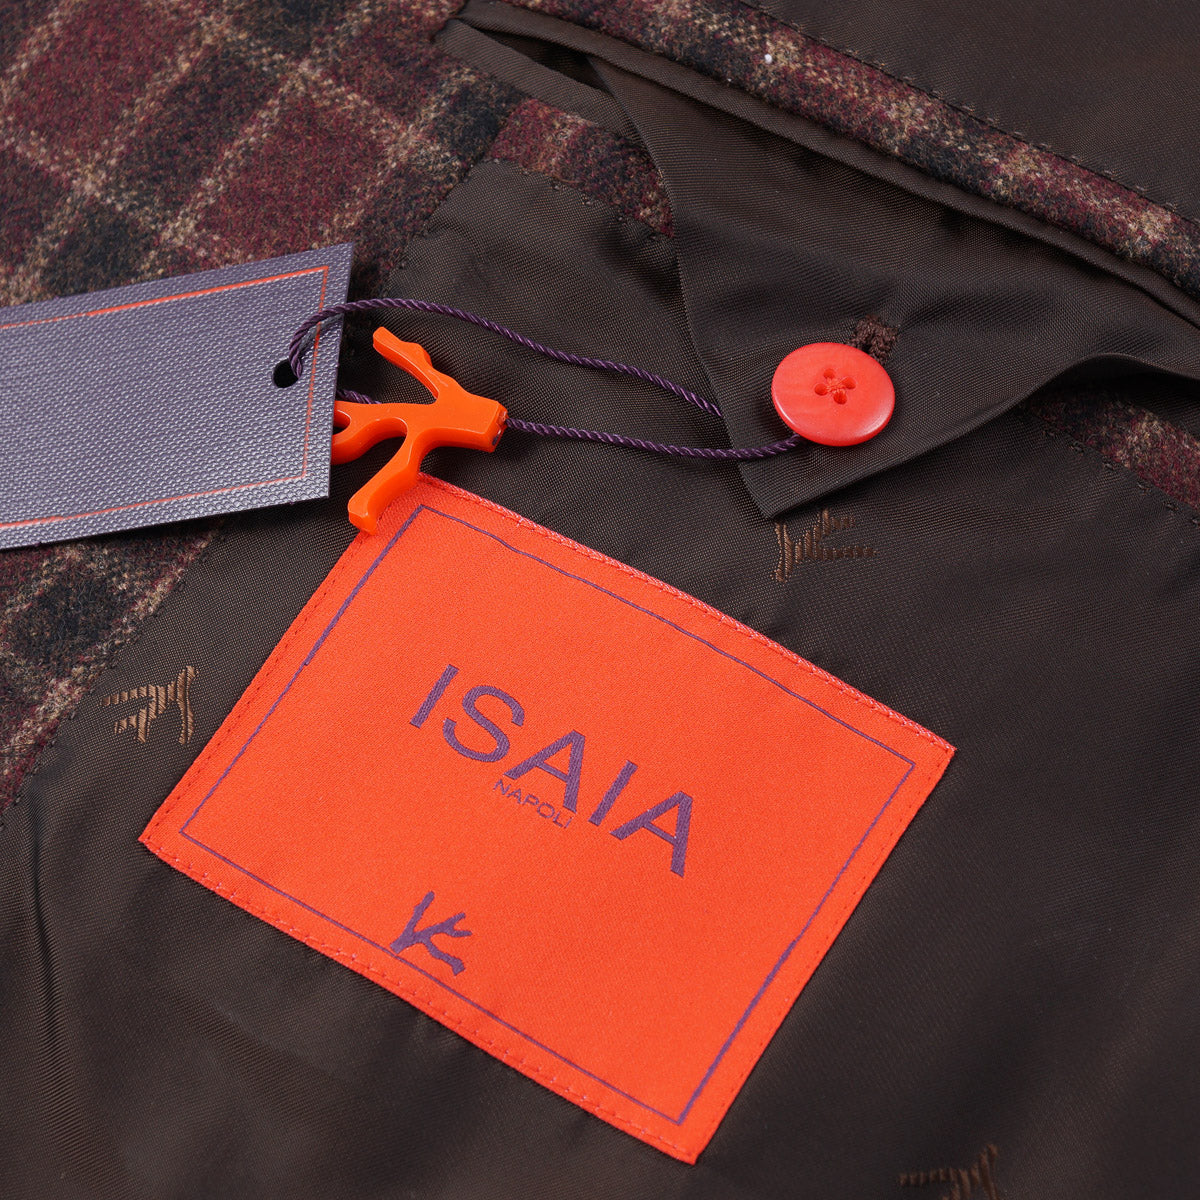 Isaia Slim-Fit Wool-Cashmere Sport Coat - Top Shelf Apparel